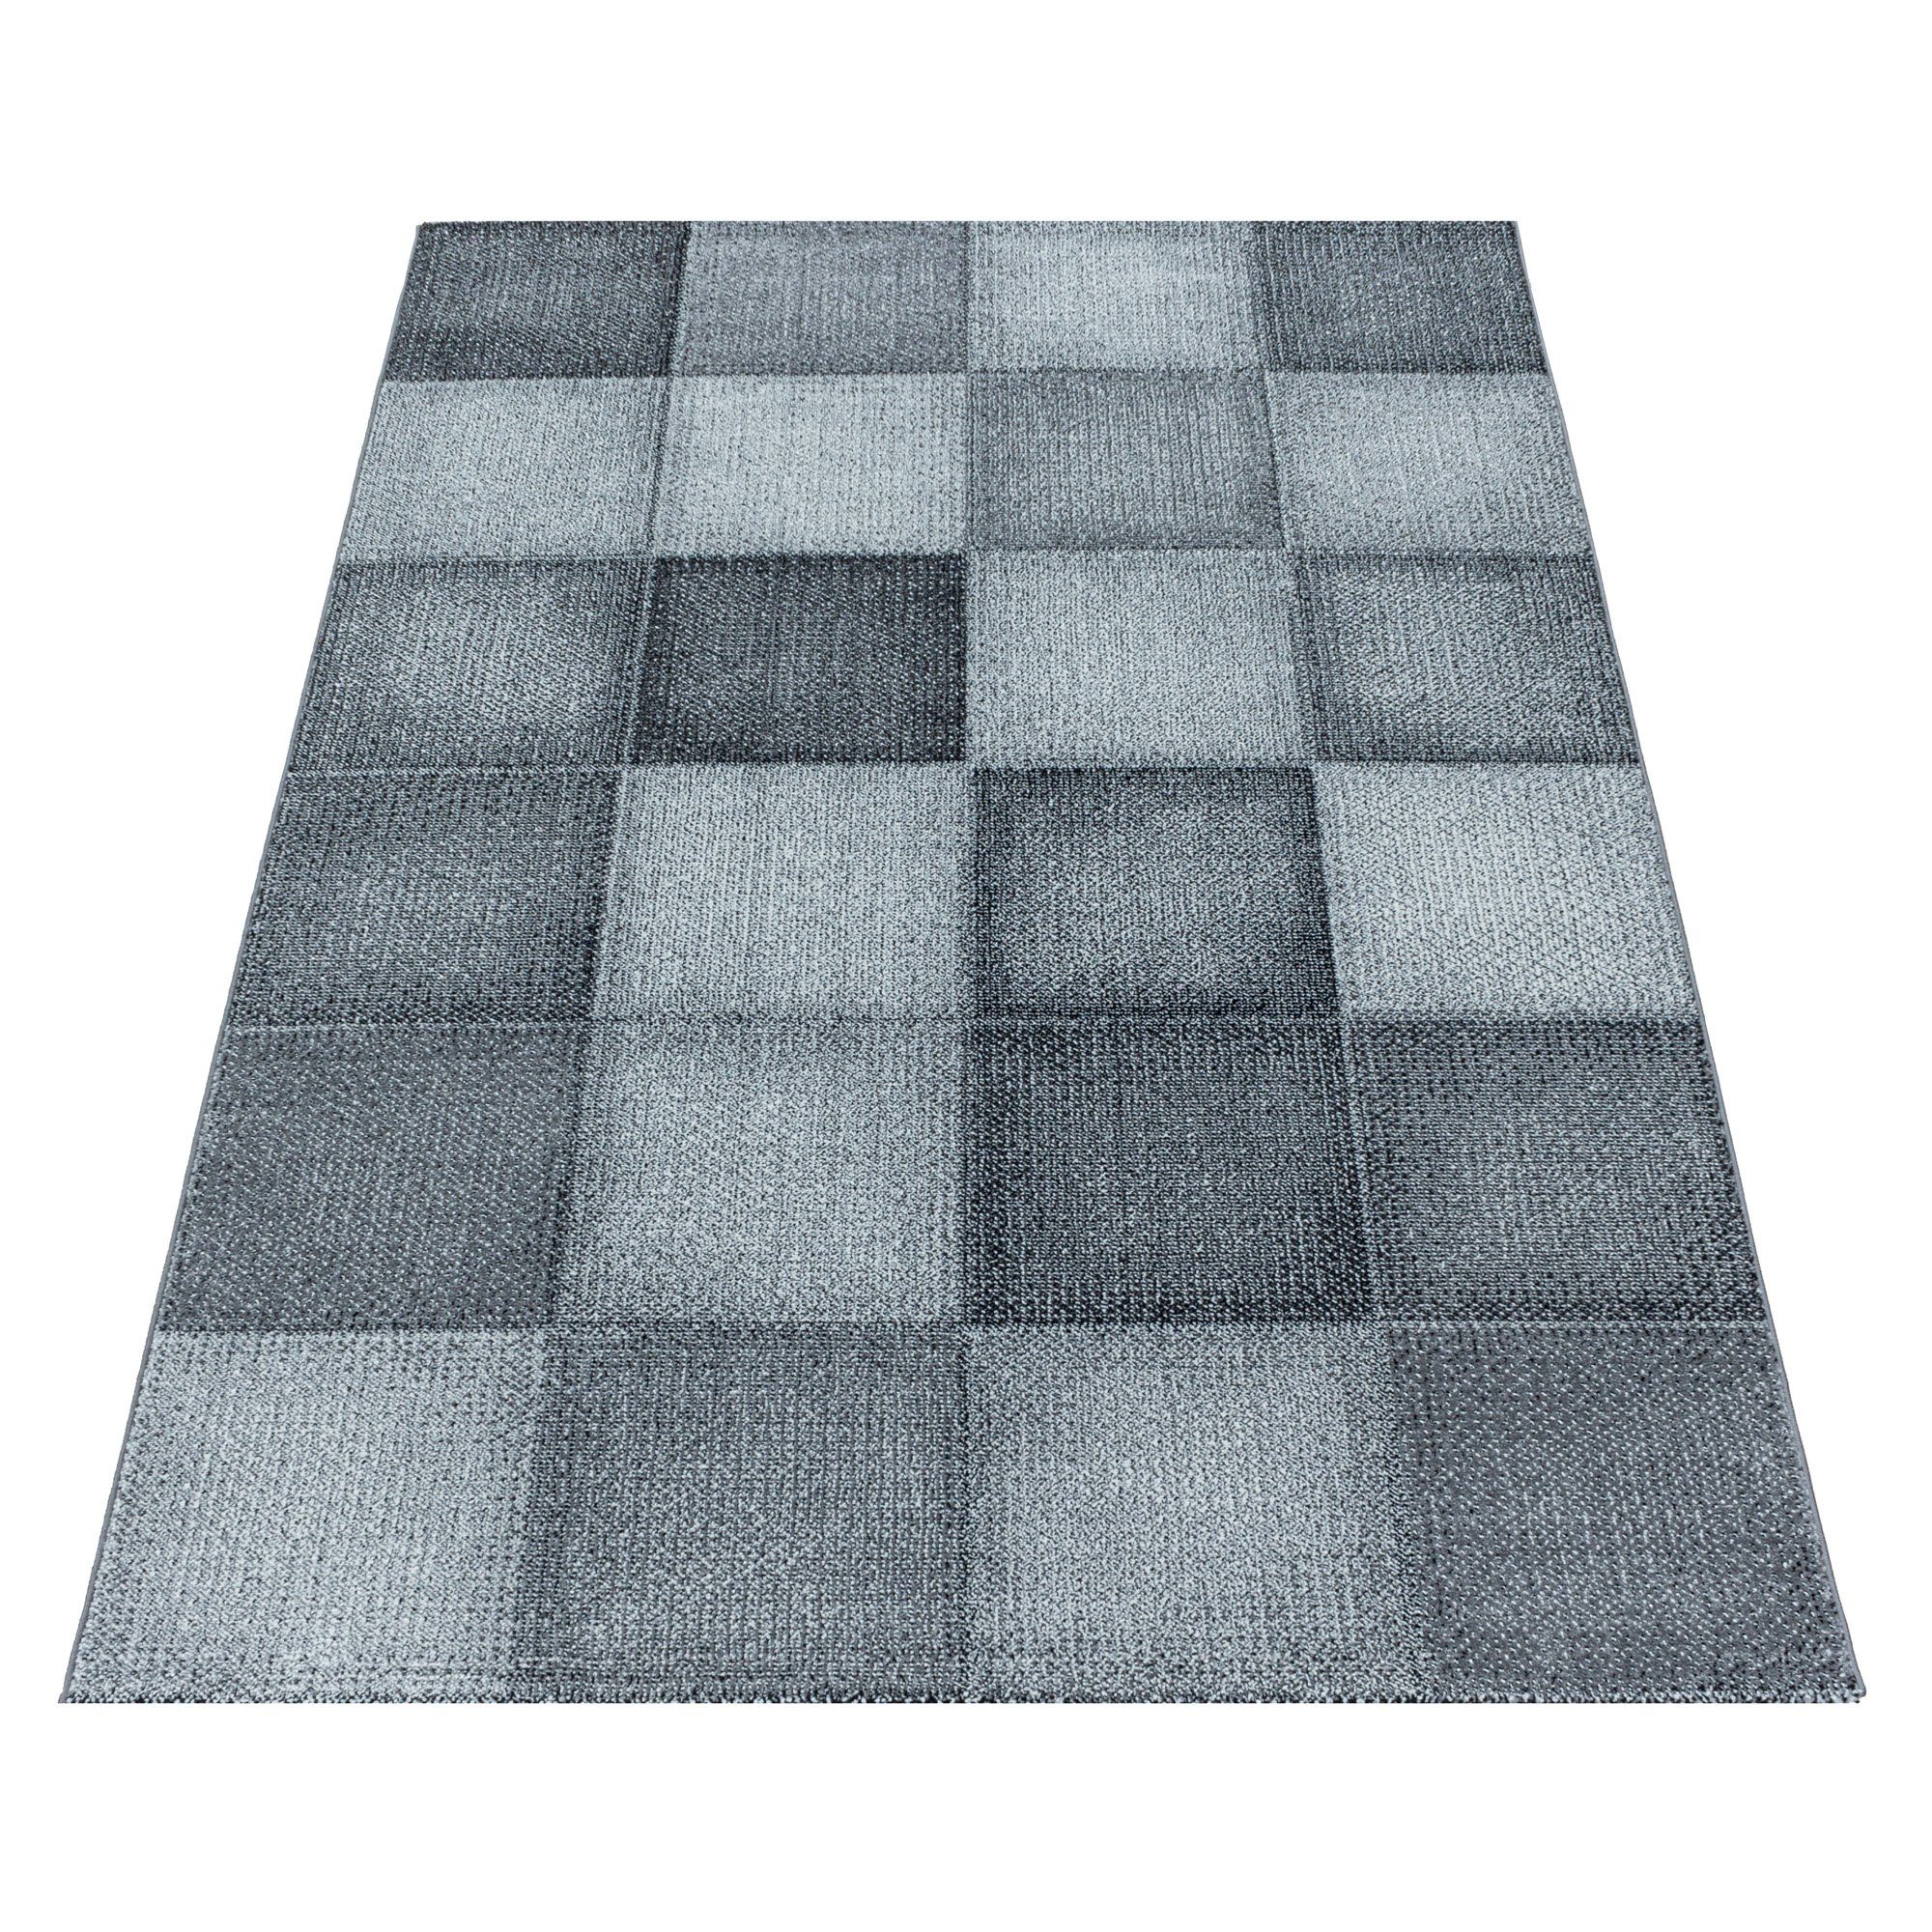 Frisé-Teppich Kariert Modern Höhe: 8 mm, größen Carpetsale24, Läufer, Design, Kariert verschidene Kurzflor Wohnzimmer Design Teppich